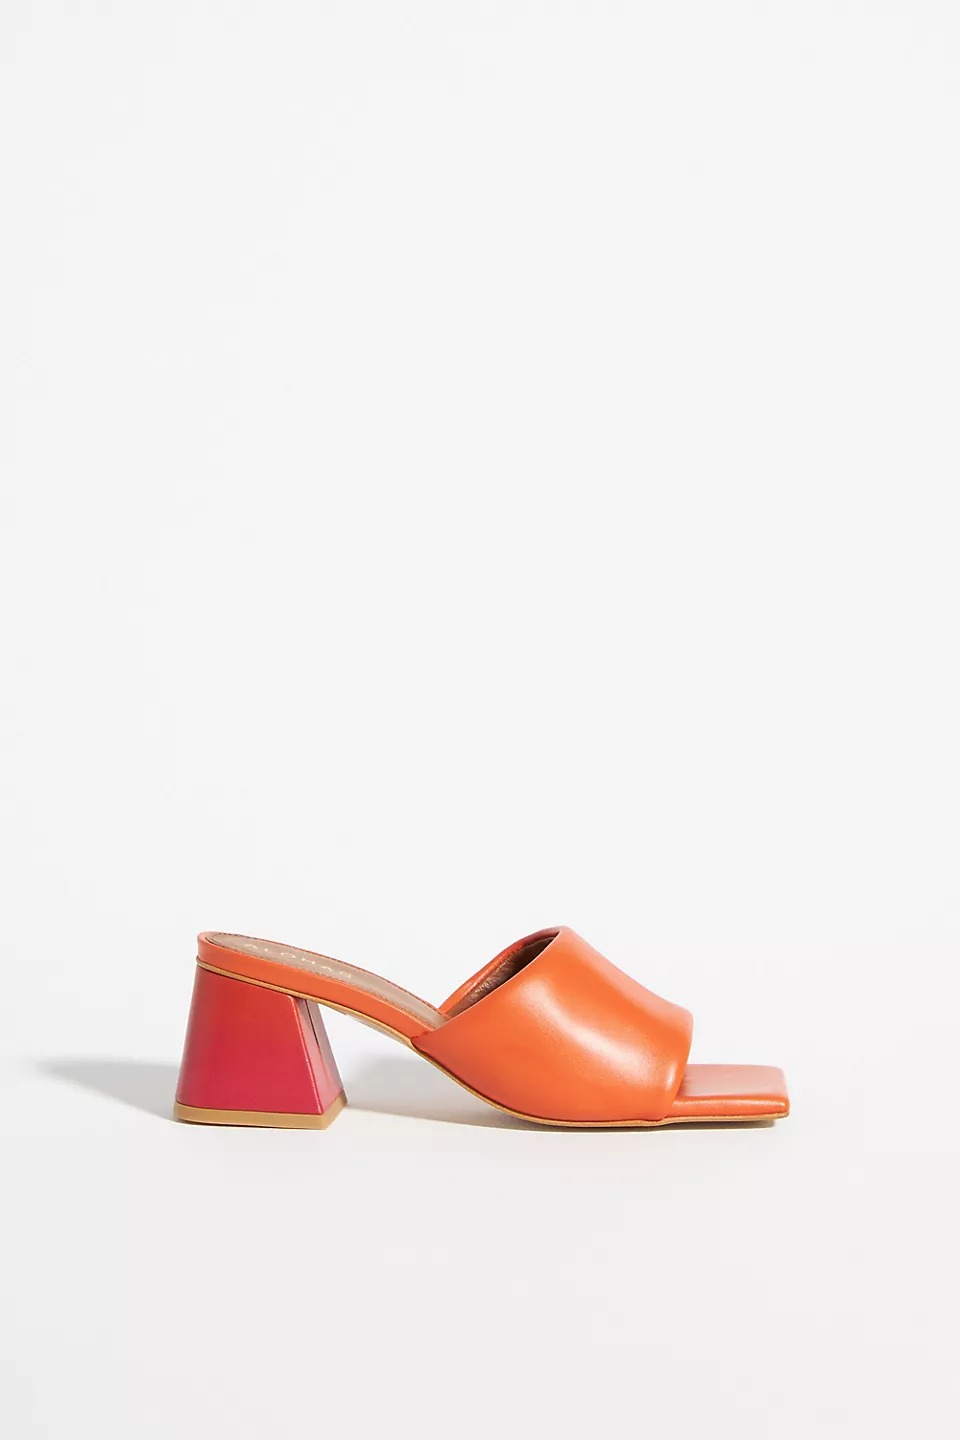 luxury designer statement shoes for women